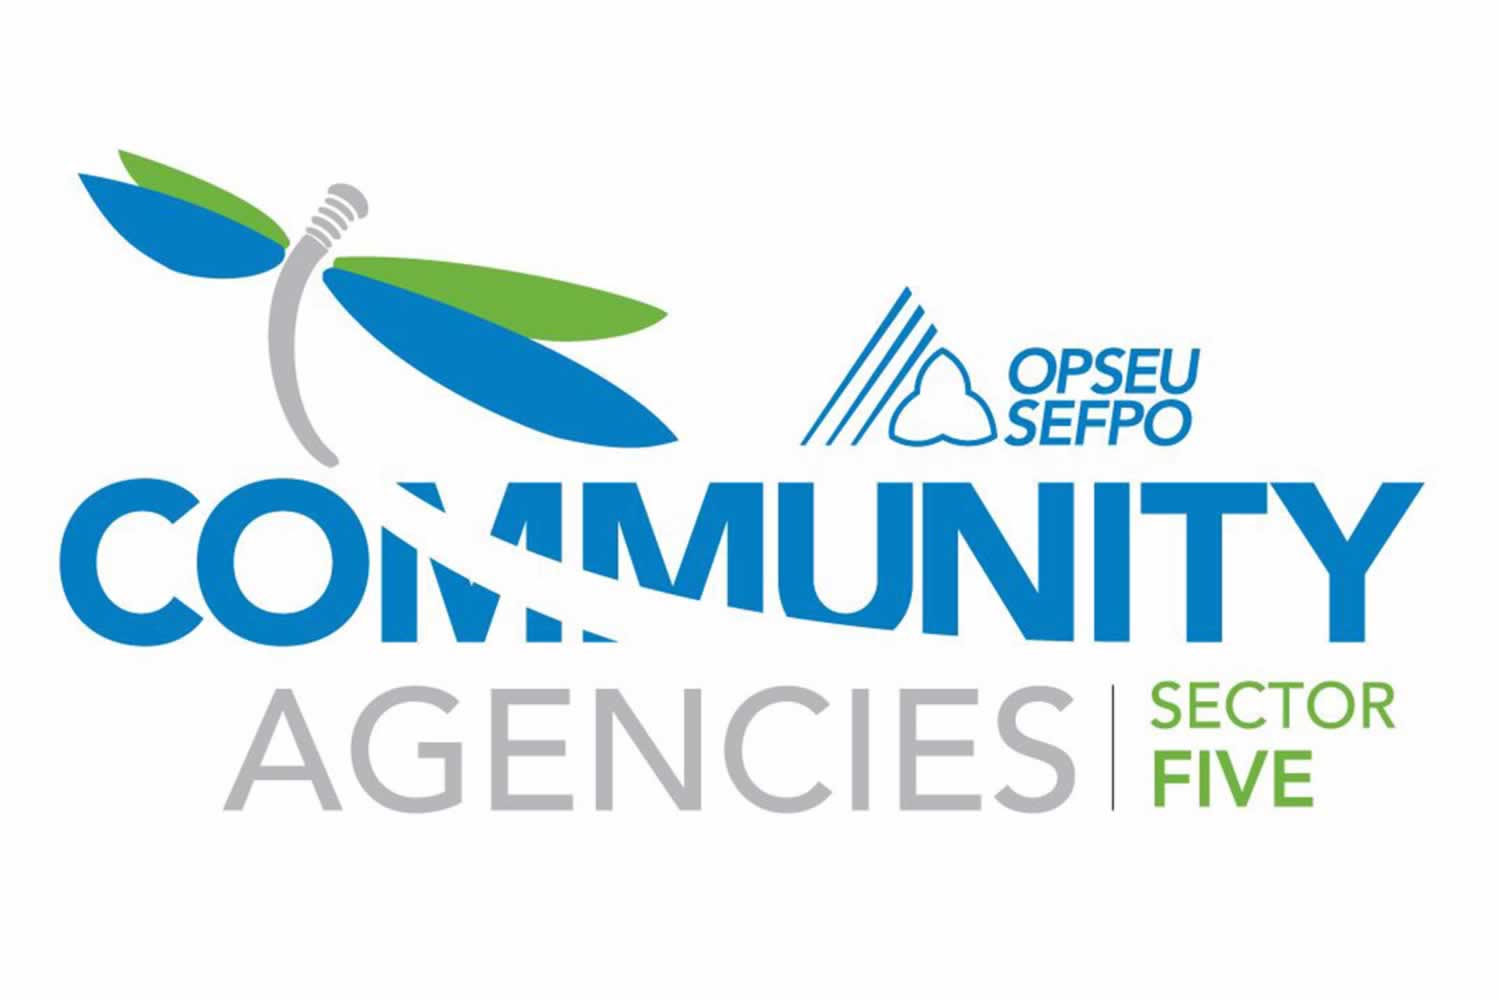 Community Agencies Sector Five logo